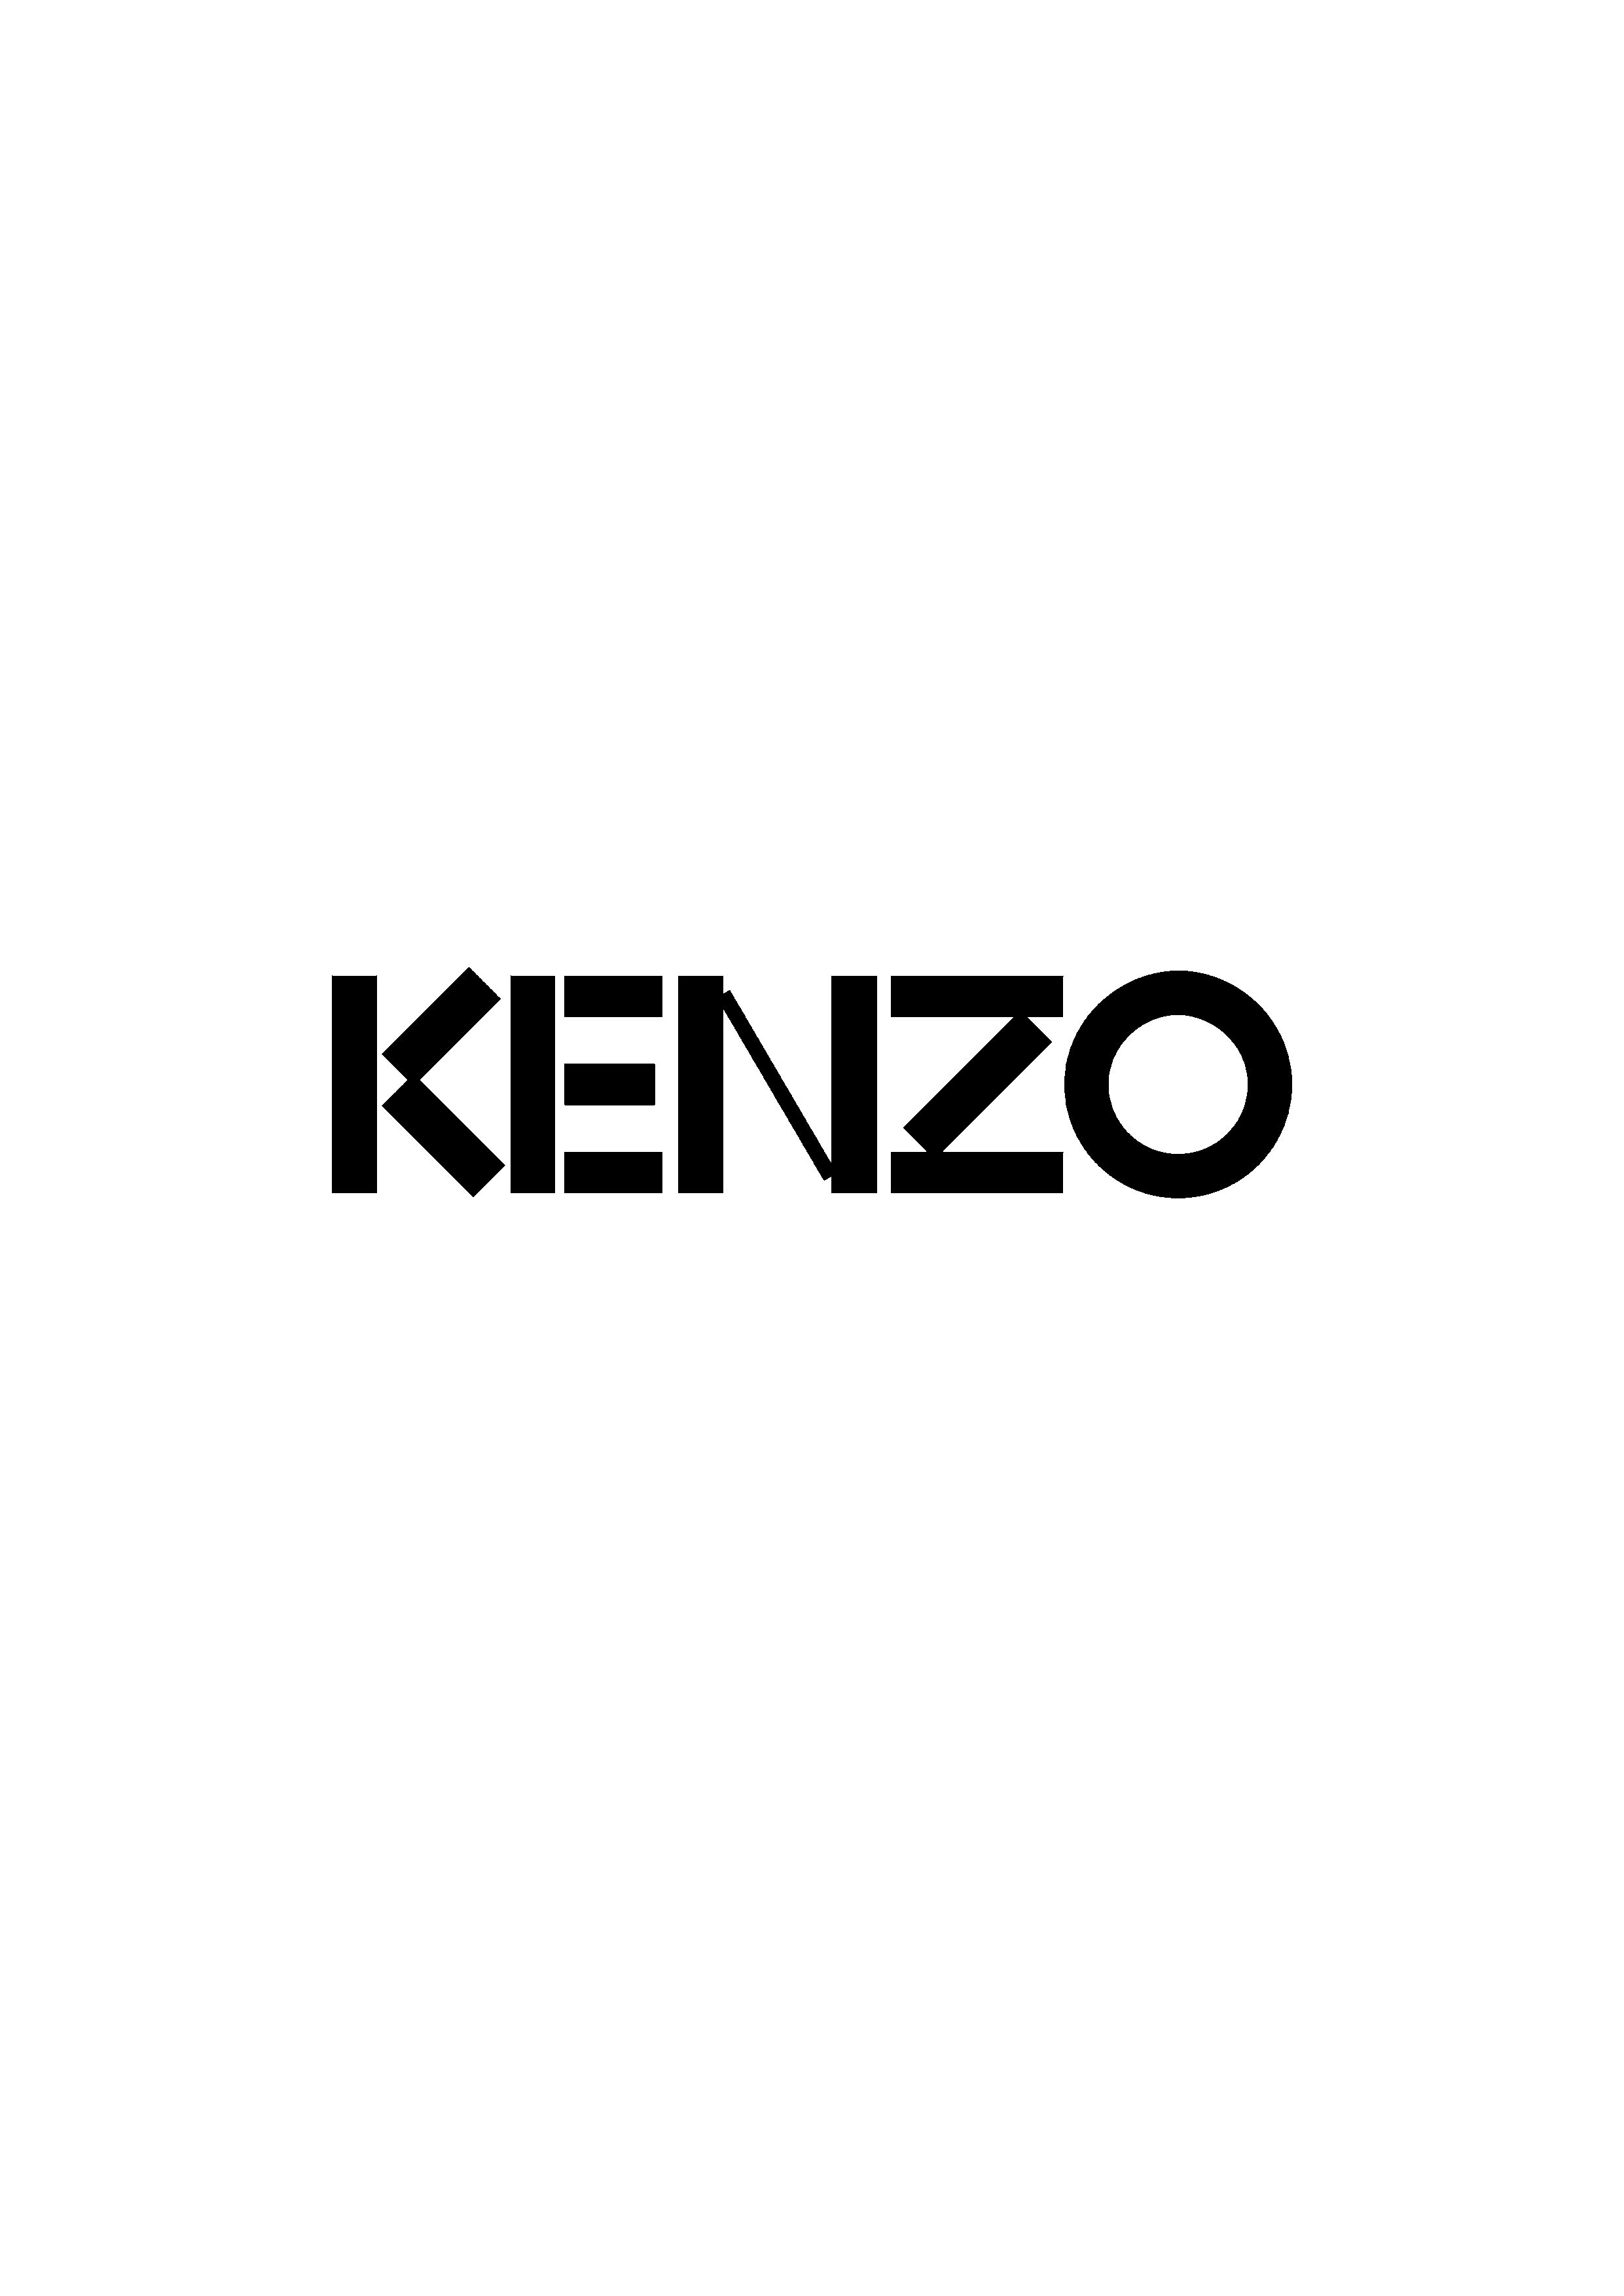 Kenzo Logo Top Sellers, 55% OFF | edetaria.com